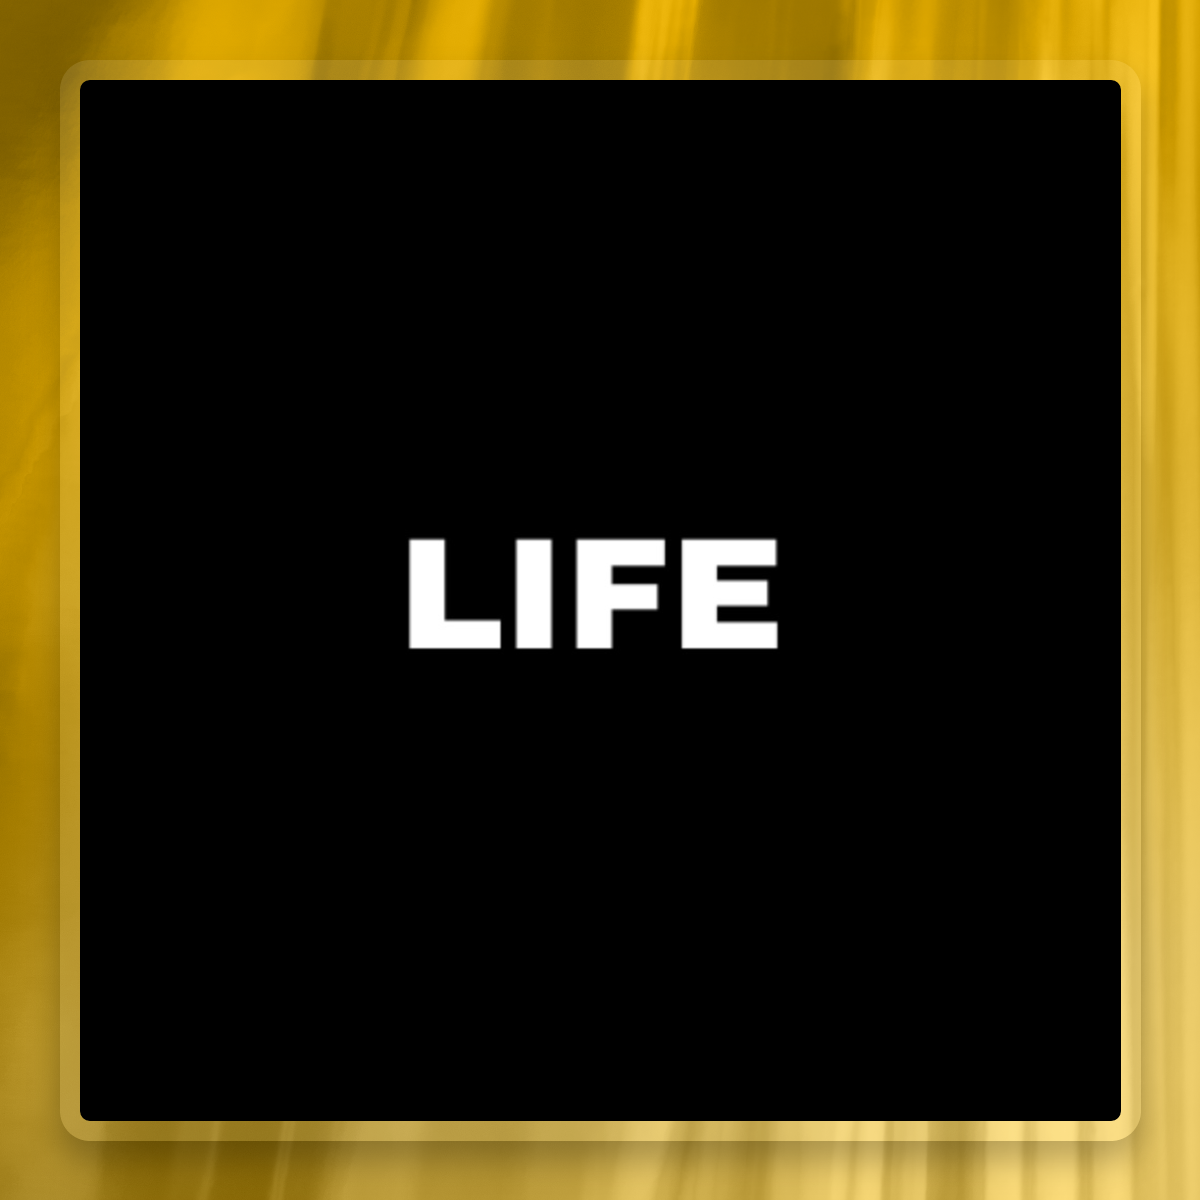 Life - Track 9 (untitled / unmixed / unmastered)